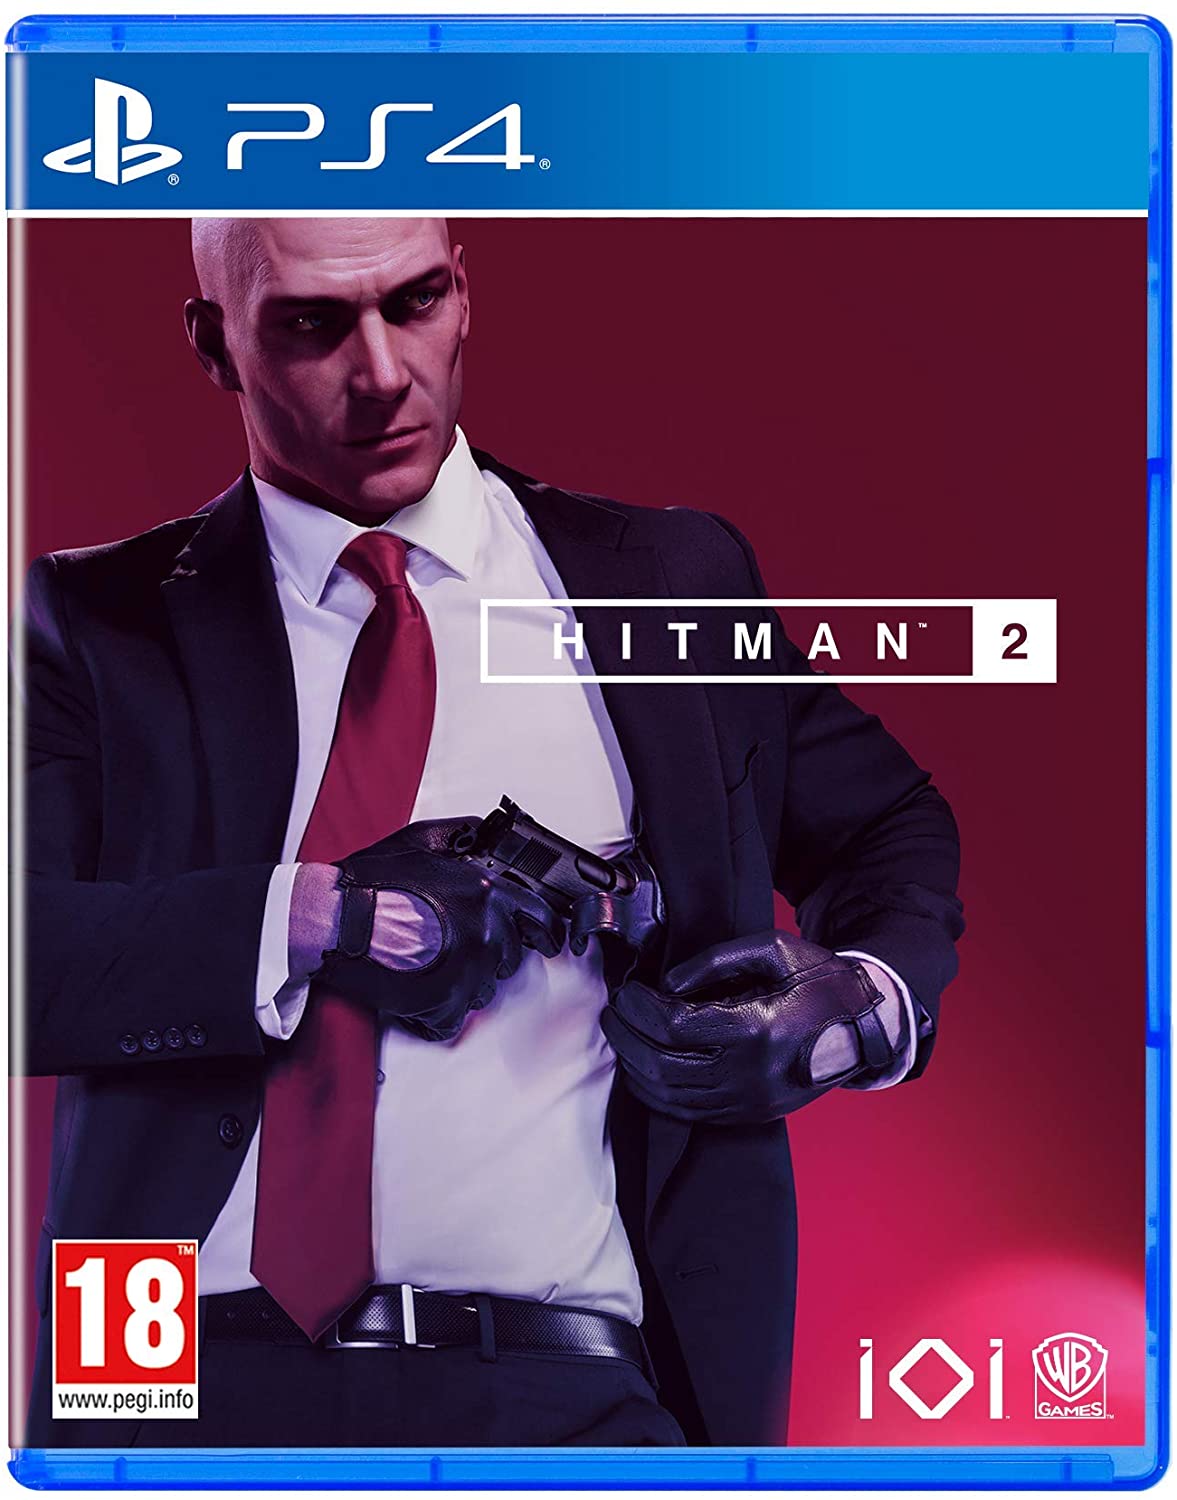 HITMAN 2 PS4 GAME BRAND NEW - saynama